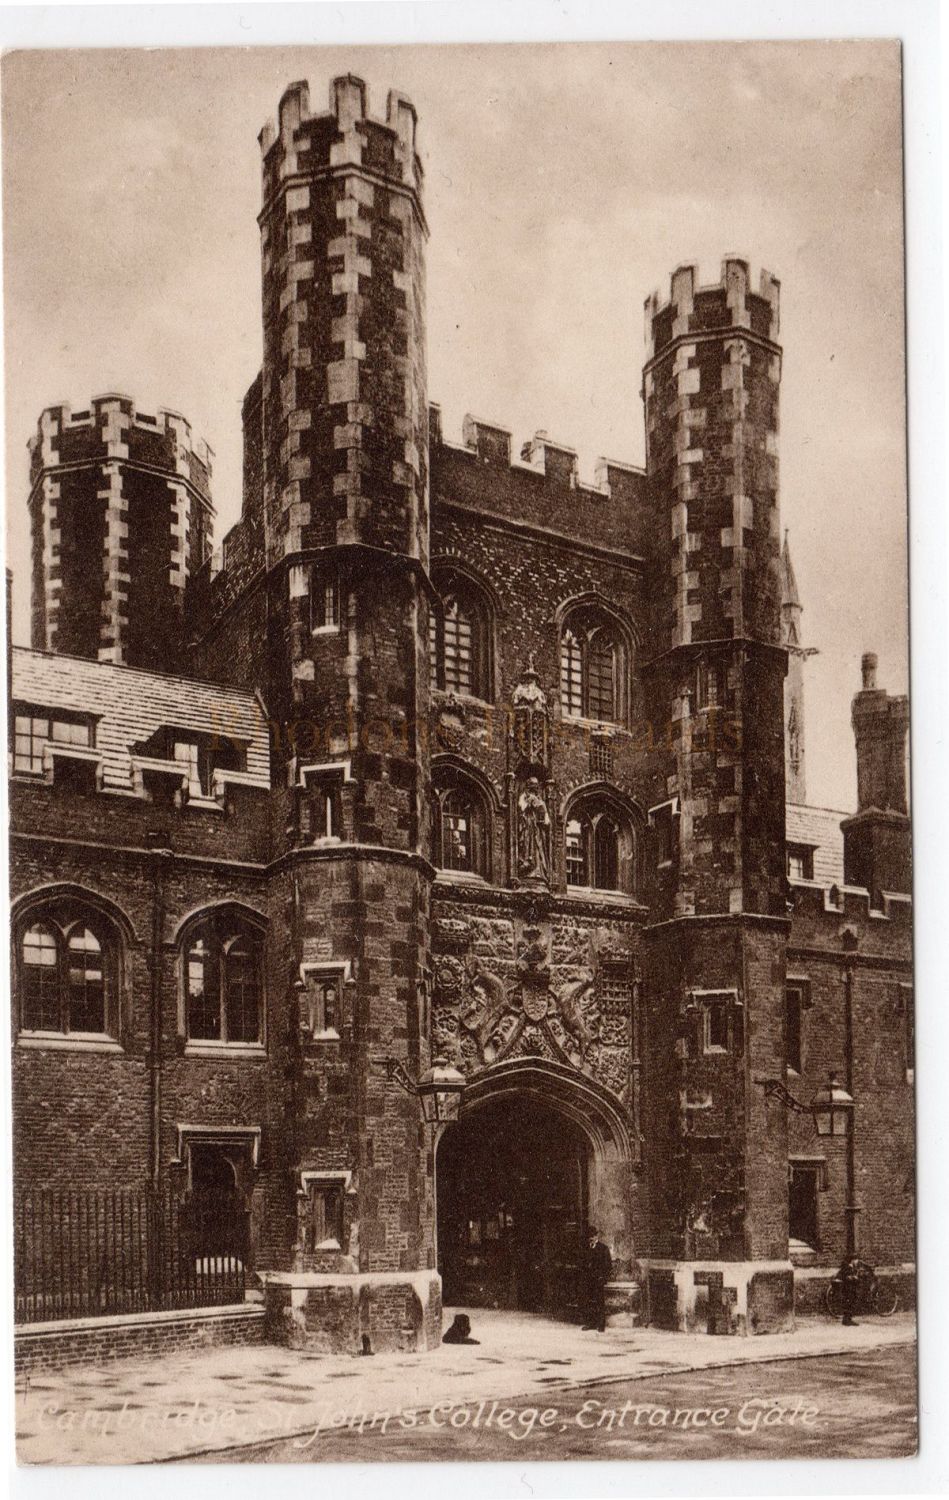 St Johns College Entrance Gate, Cambridge Postcard (Friths)